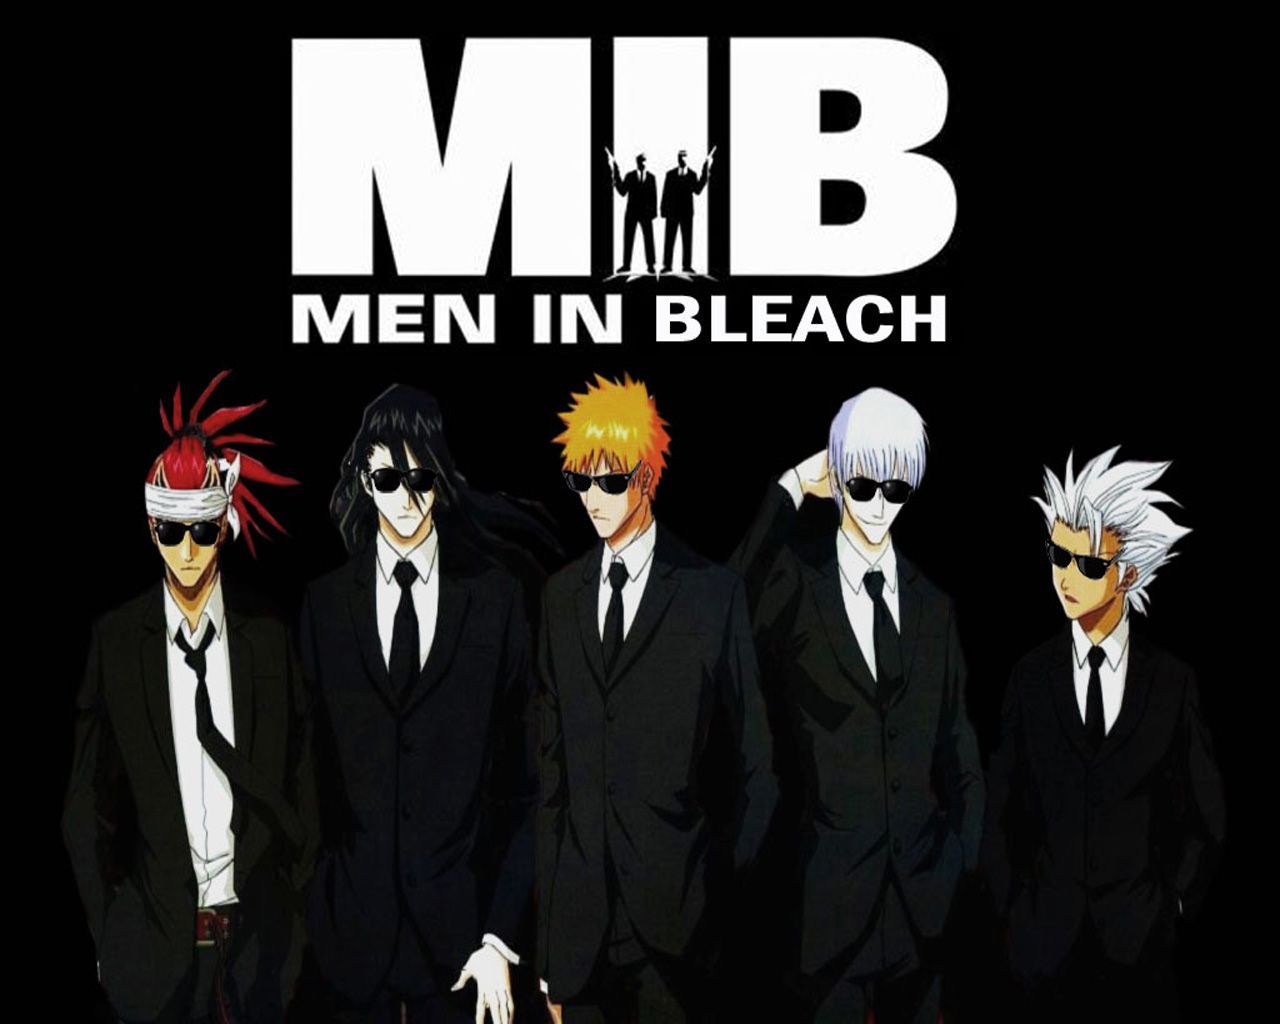 Download Bleach Guys Anime Wallpaper 1280x1024 | Full HD Wallpapers